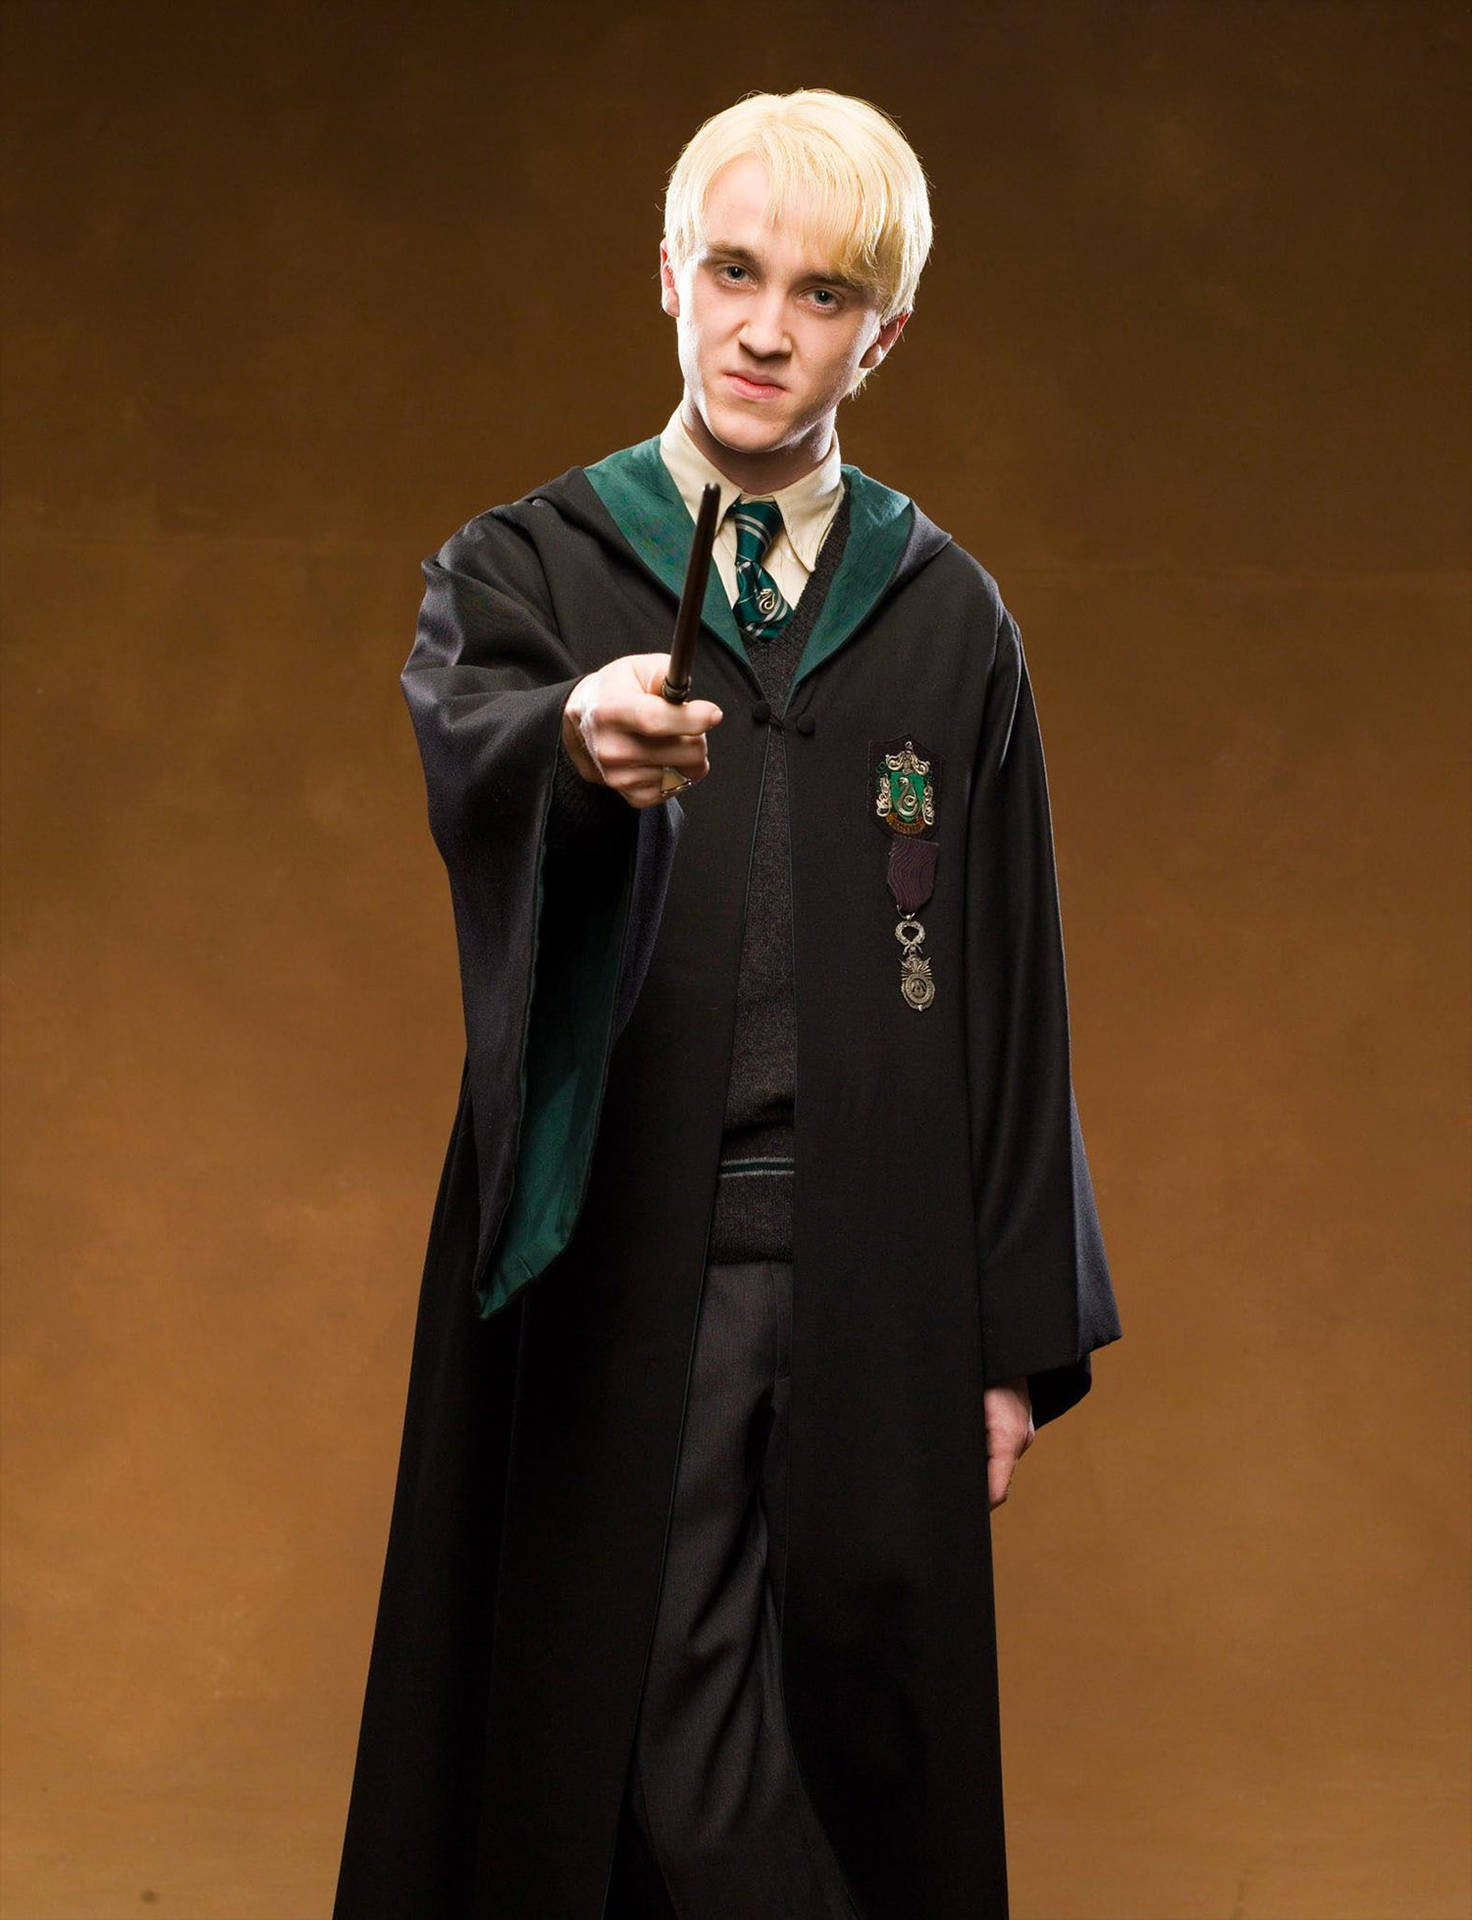 Wizard Draco Malfoy Photoshoot Wallpaper